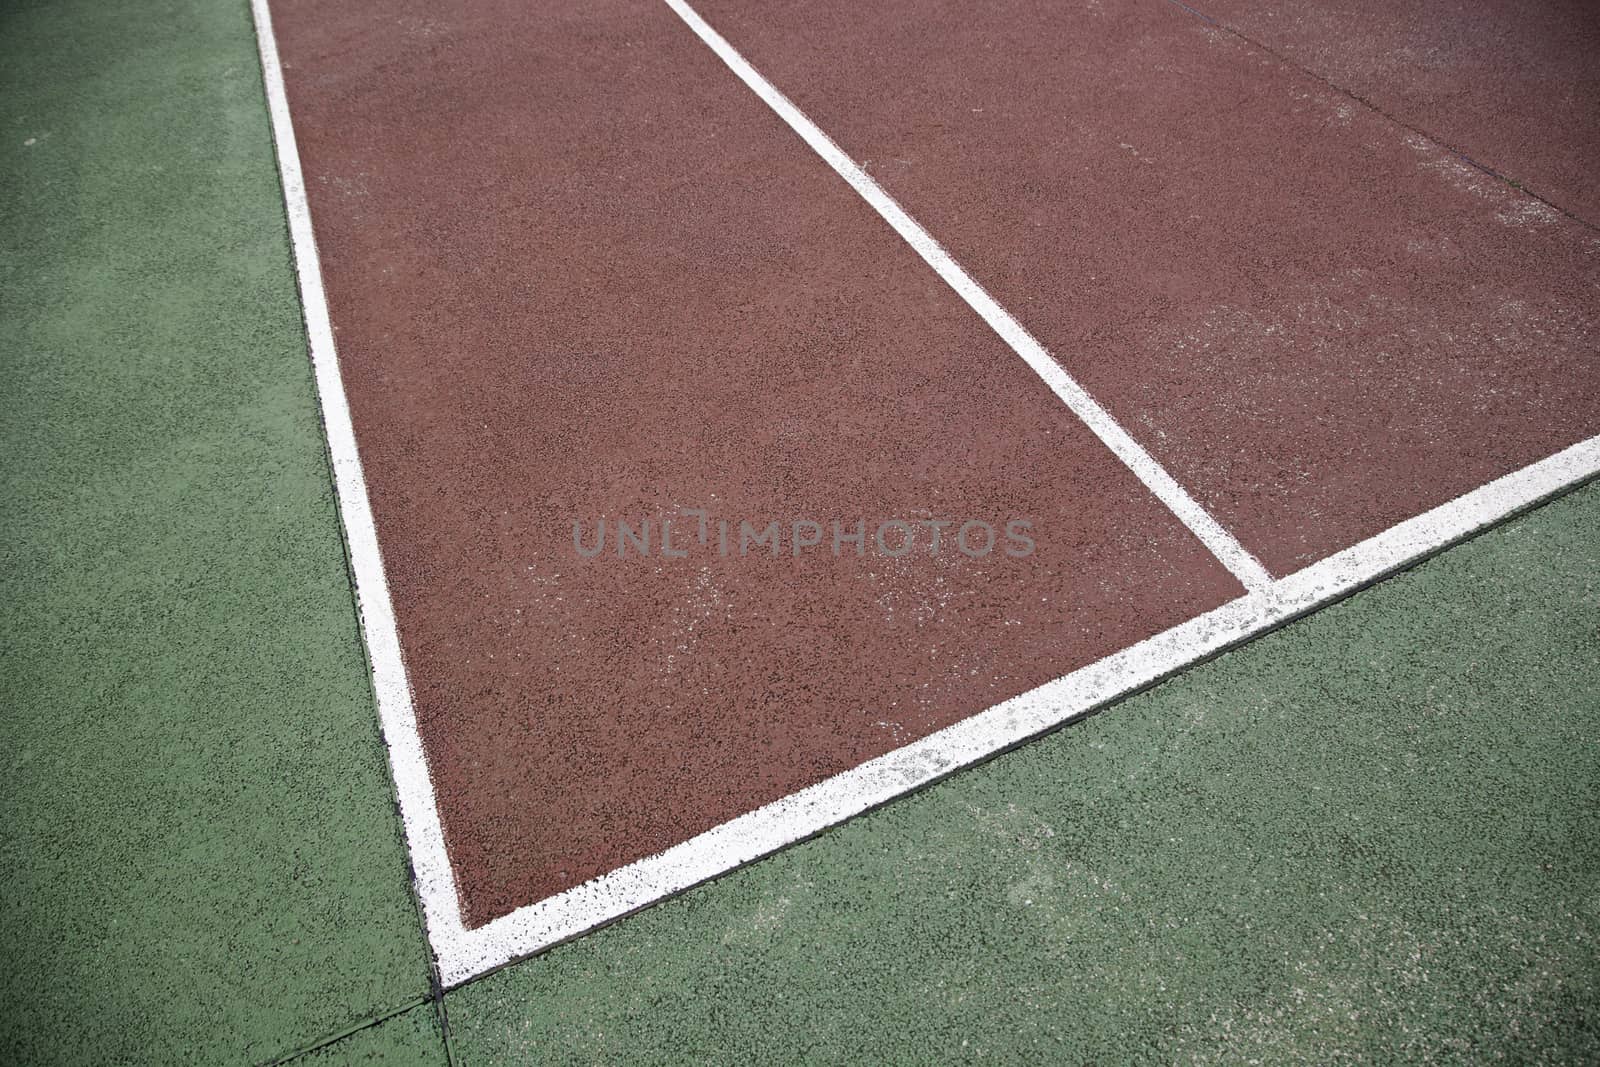 Tennis court by esebene